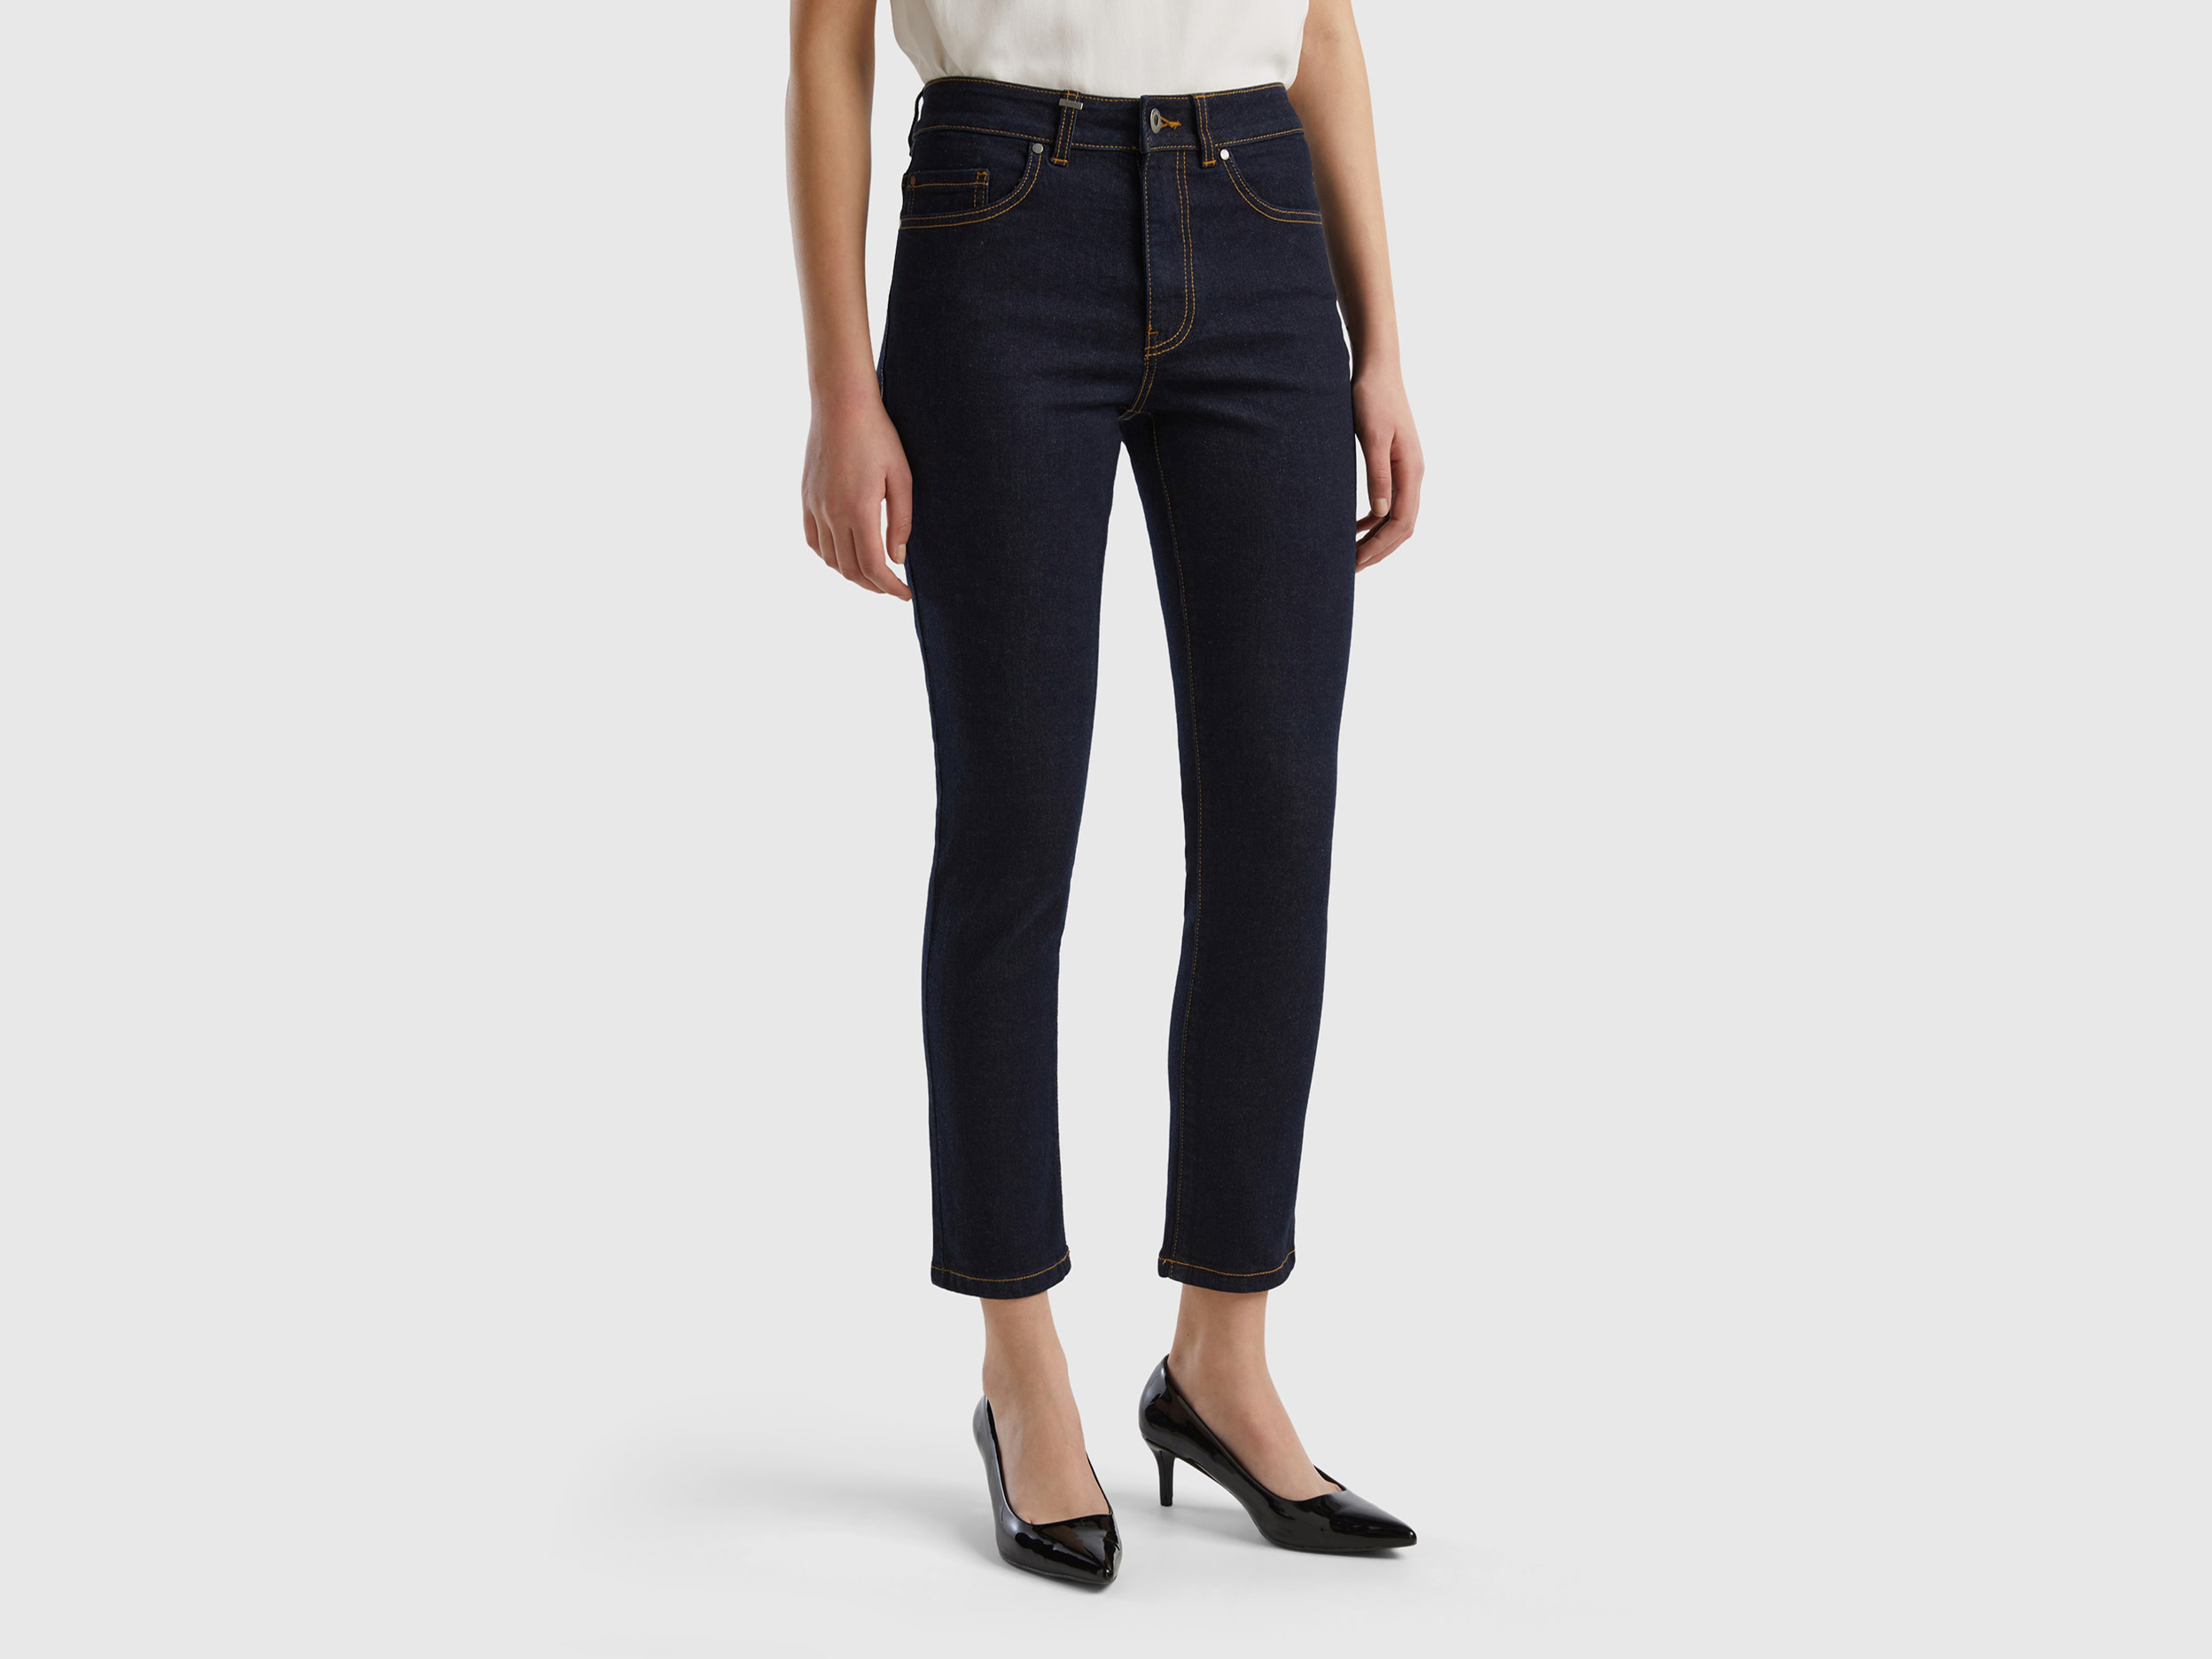 Benetton, Slim Fit High-waisted Jeans, size 25, Dark Blue, Women